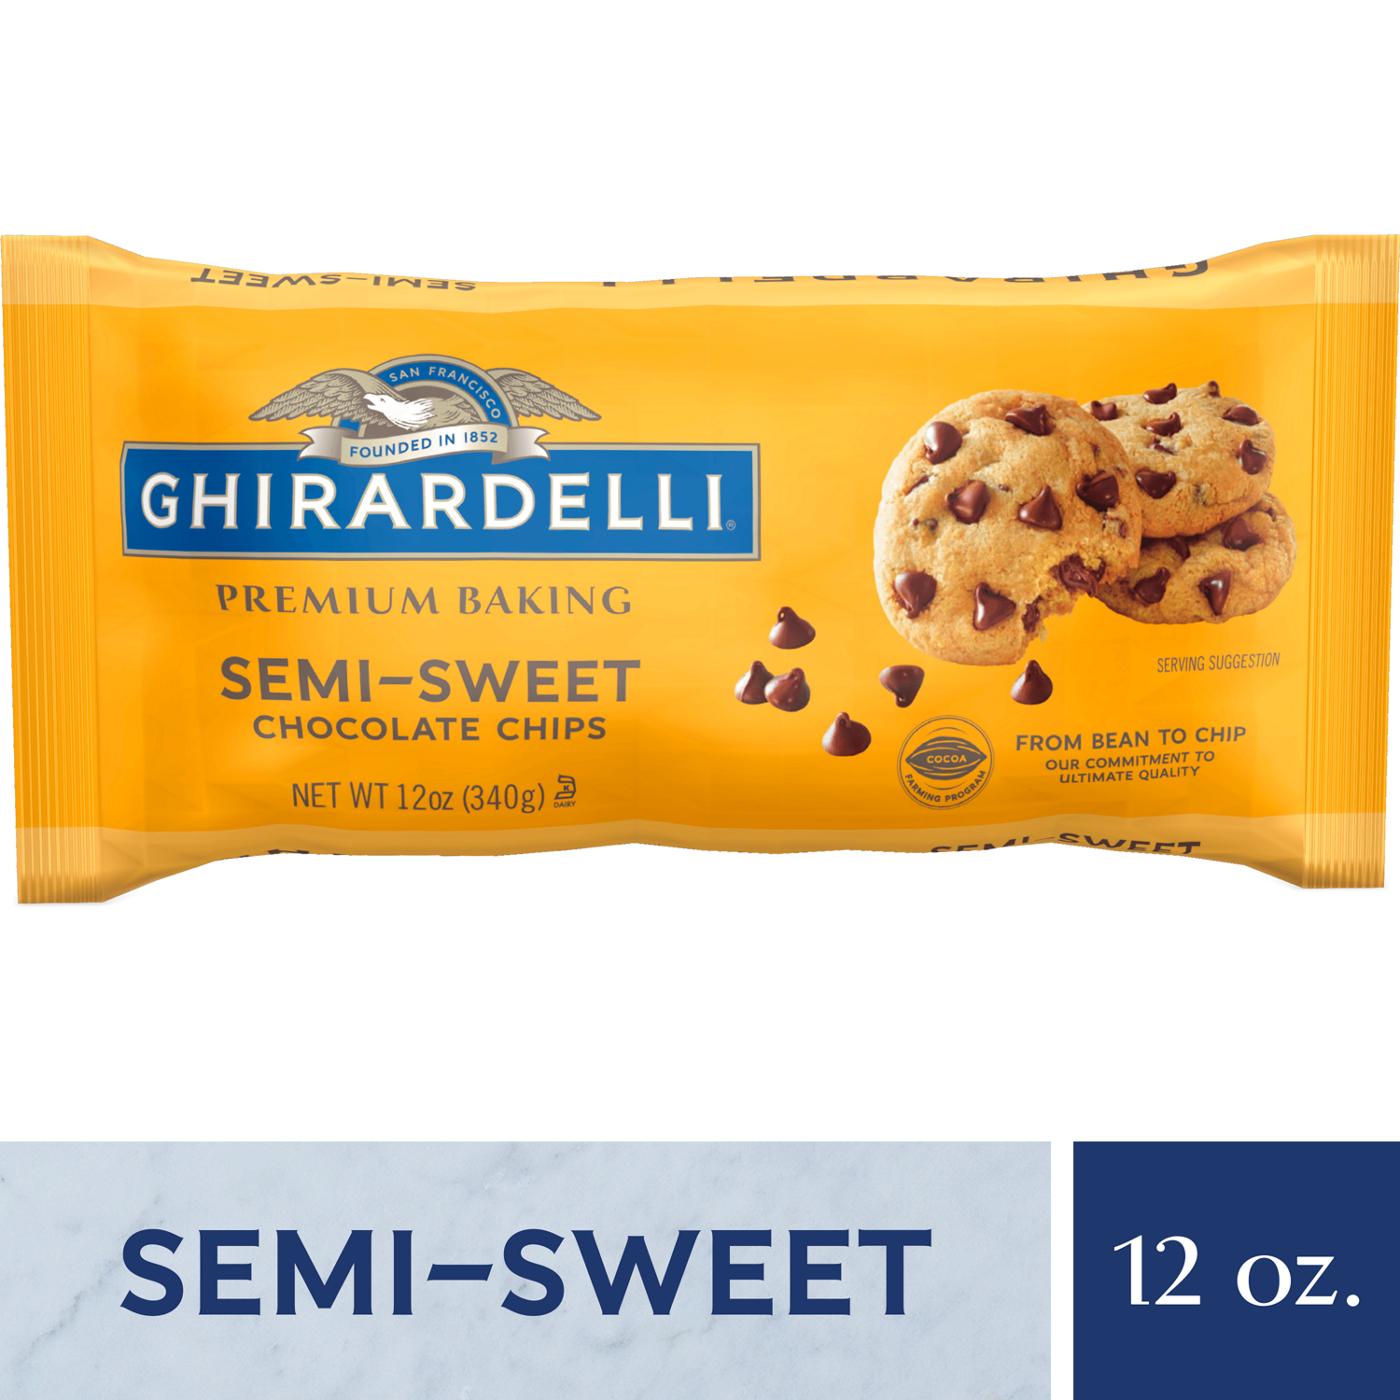 Ghirardelli Semi-Sweet Chocolate Premium Baking Chips, Chocolate Chips for Baking; image 6 of 7